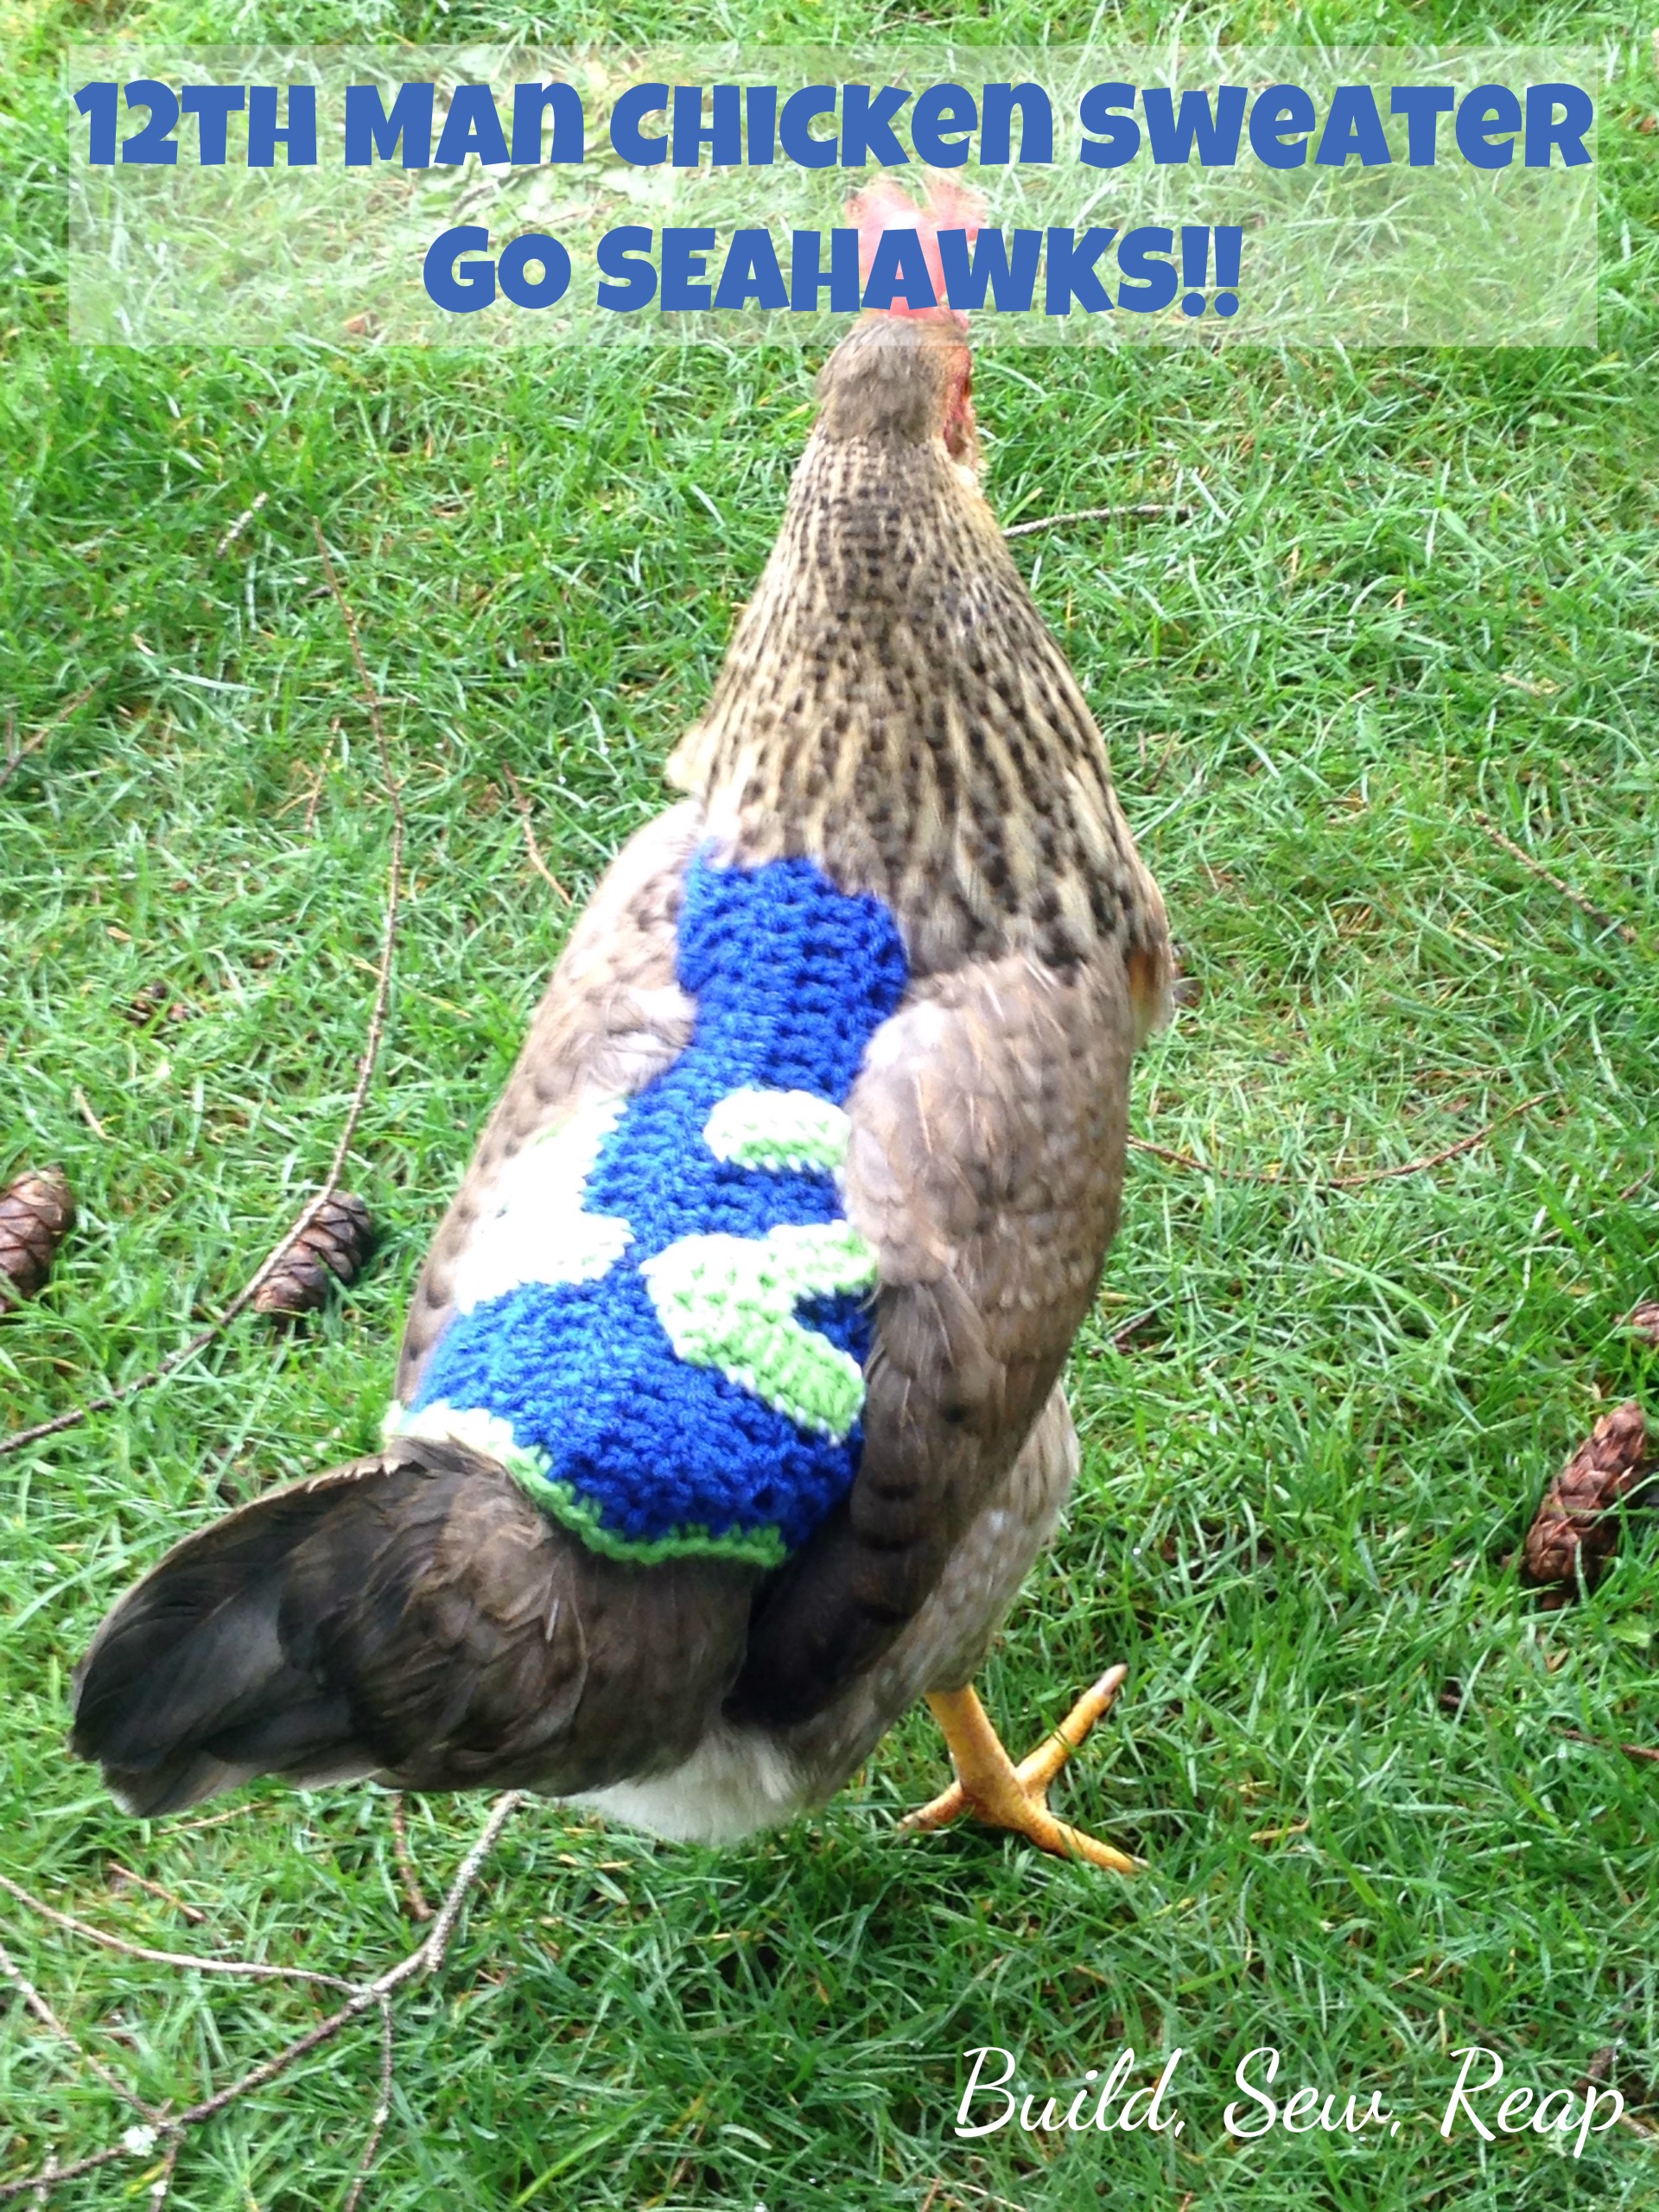 Seahawks 12th Man Chicken Sweater